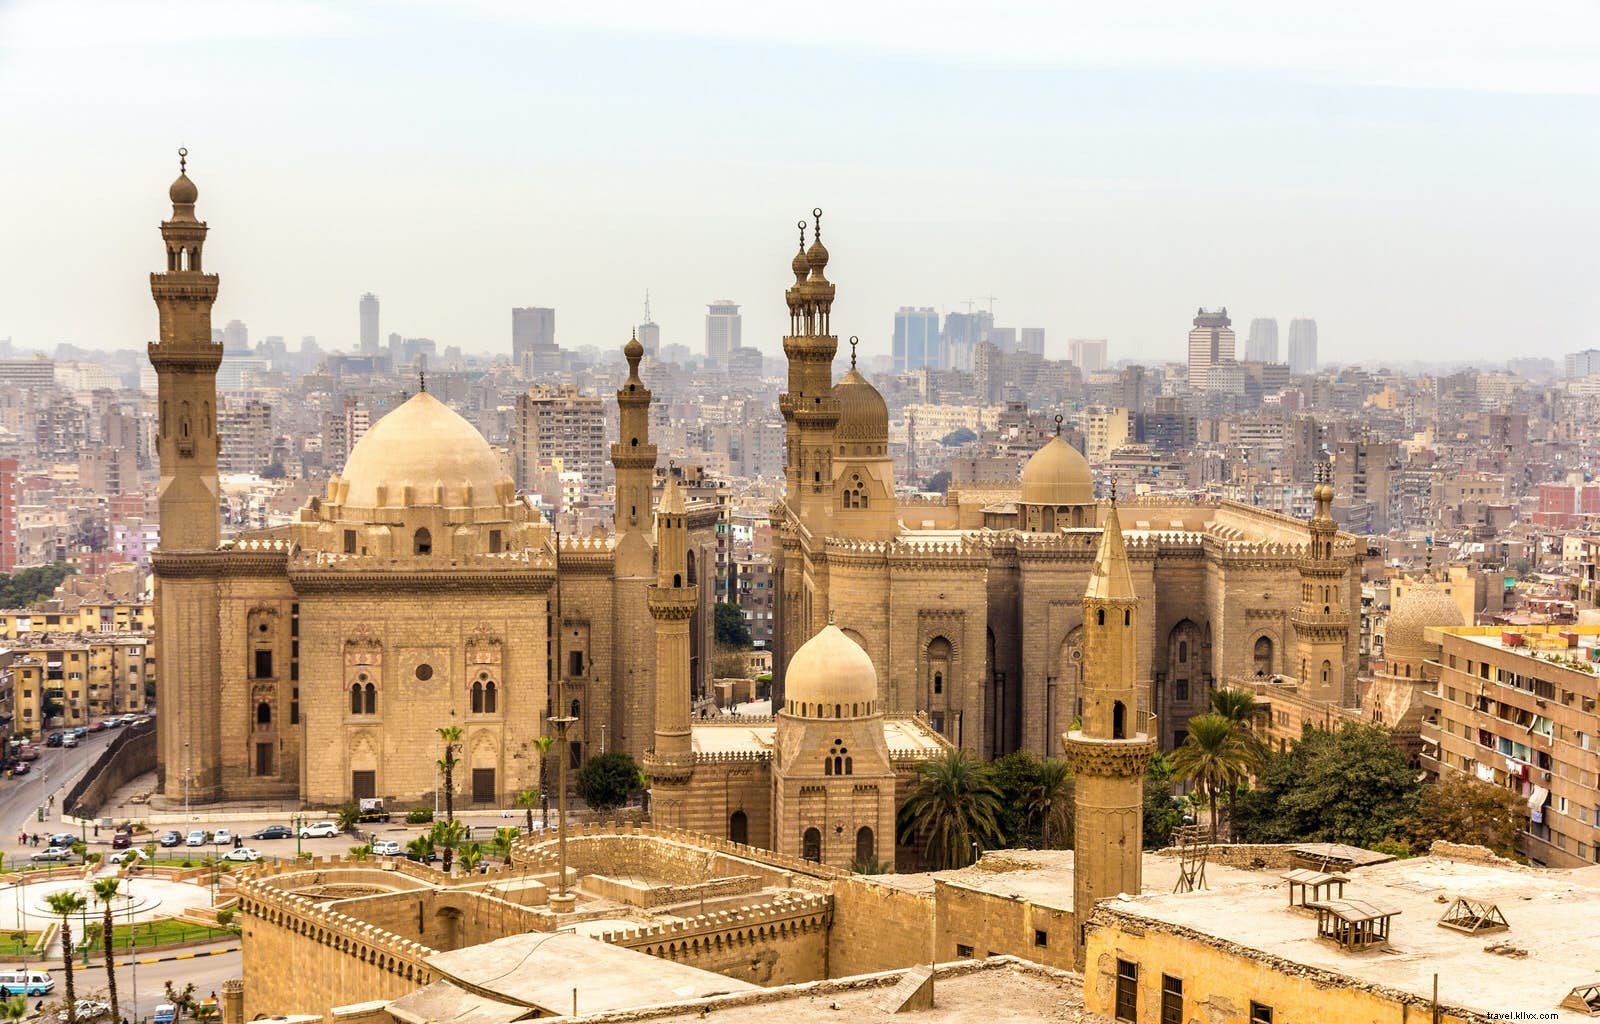 Menjelajahi arsitektur era Mamluk di Kairo 